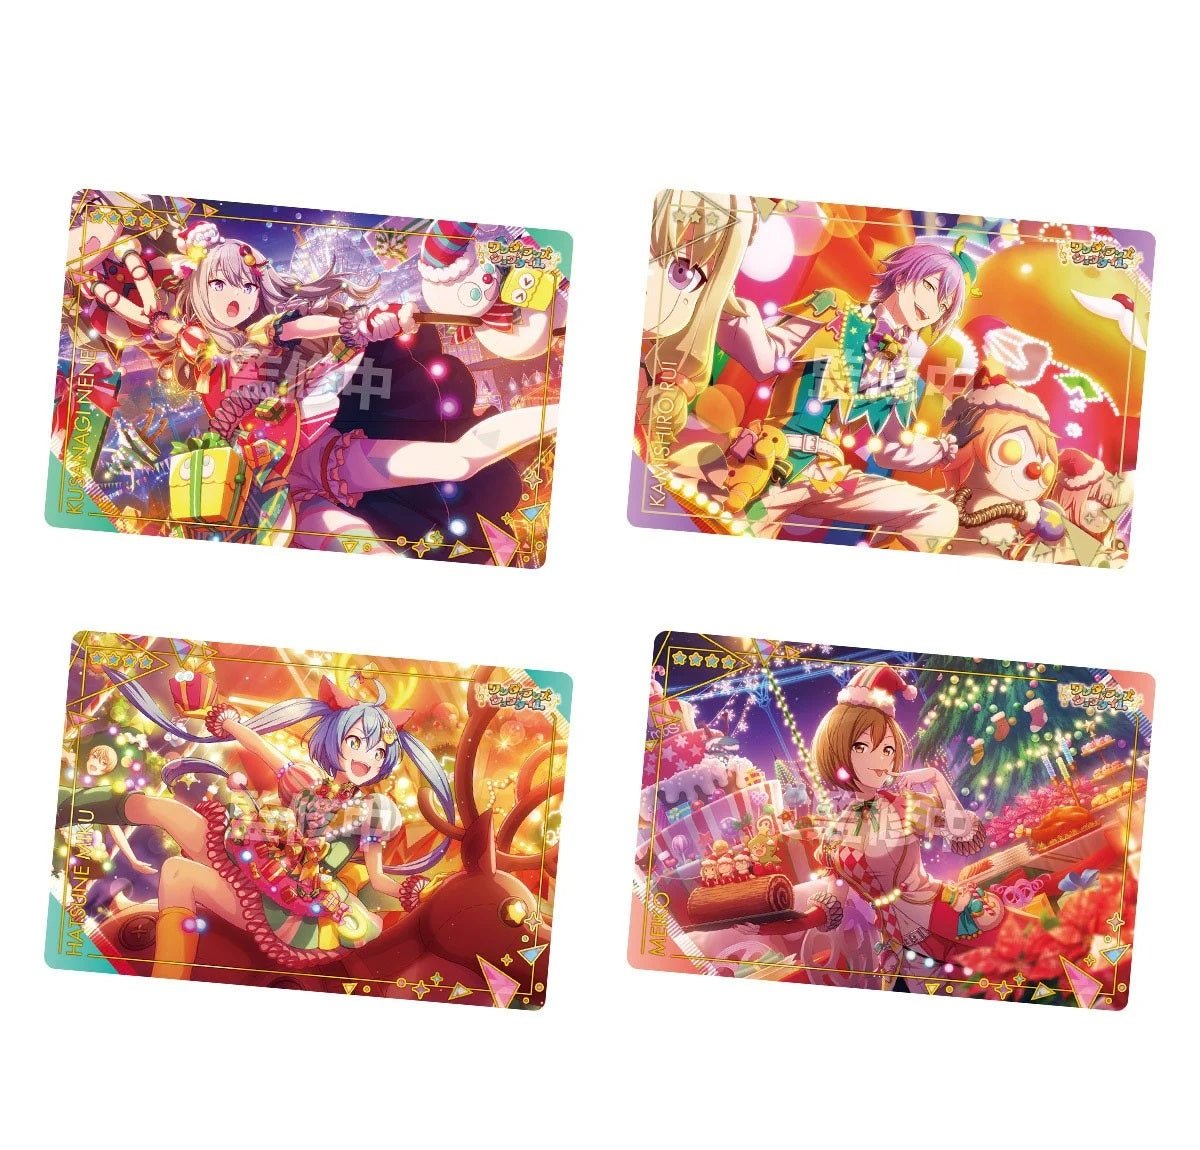 Project Sekai: Colorful Stage Hatsune Miku Wafer 4 Box - Rapp Collect